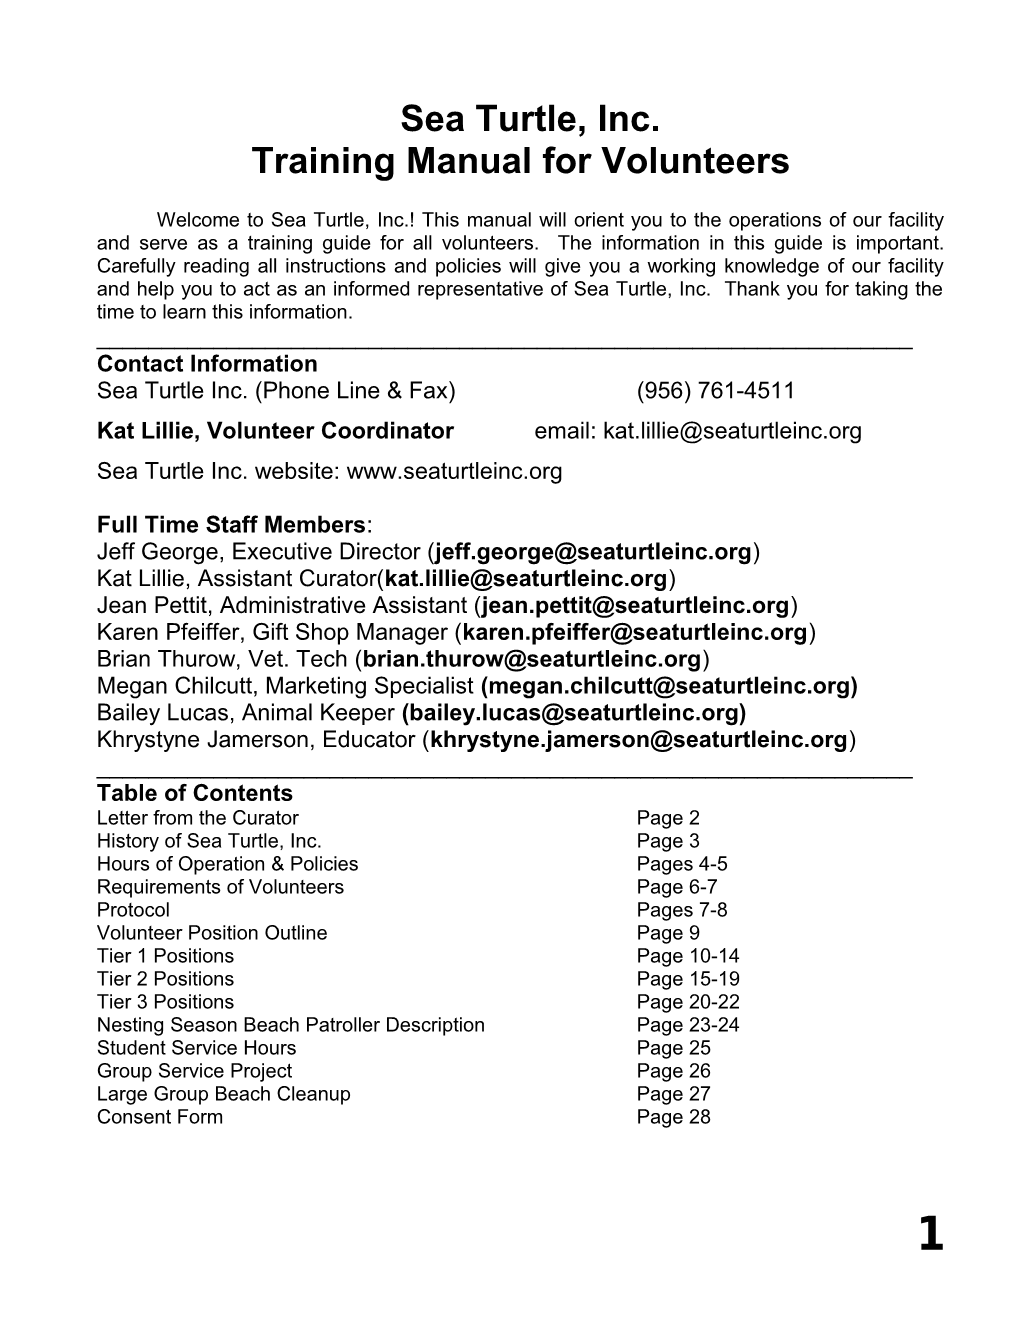 Training Manual for Volunteers